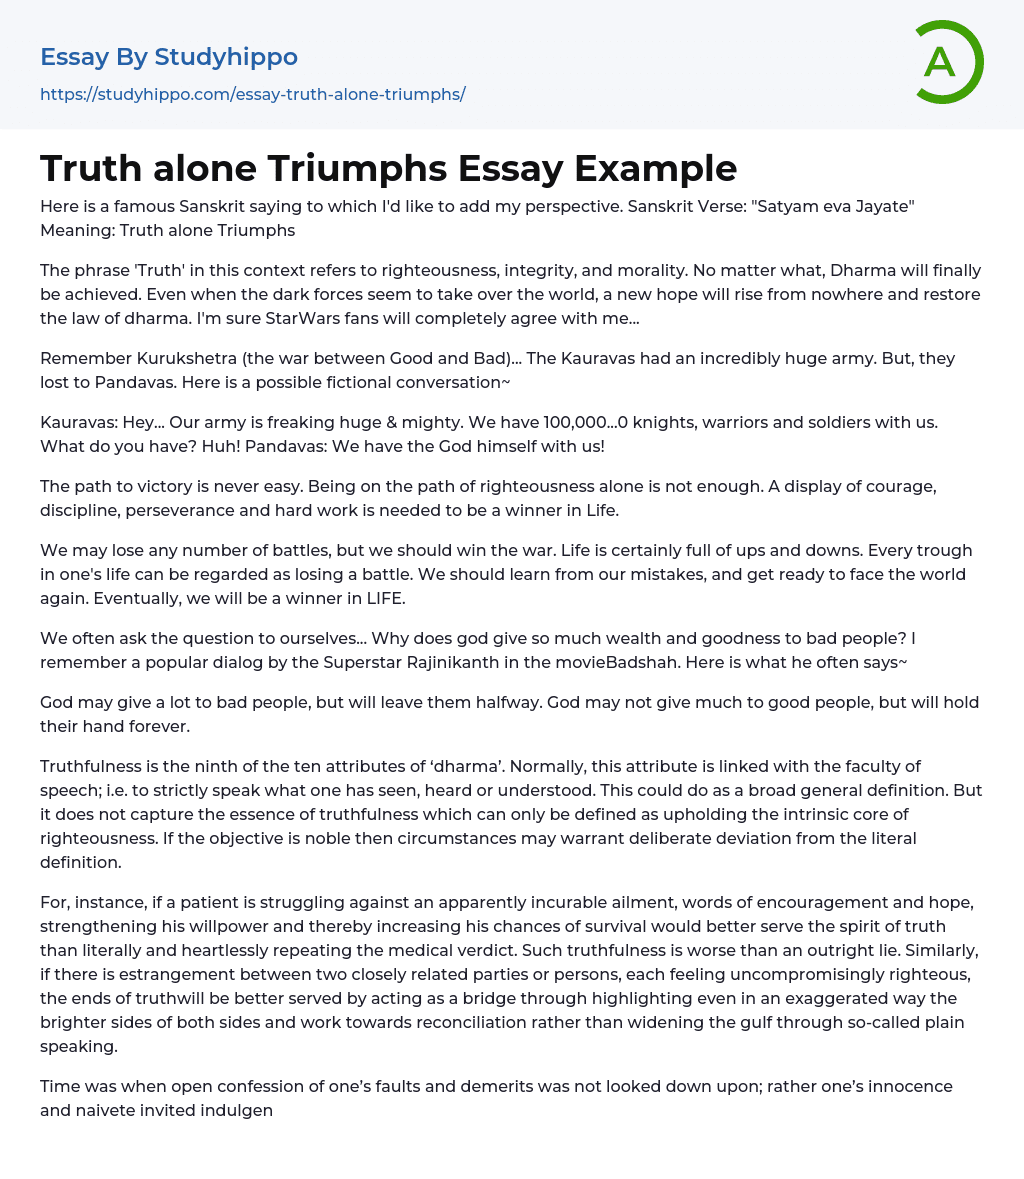 Truth alone Triumphs Essay Example